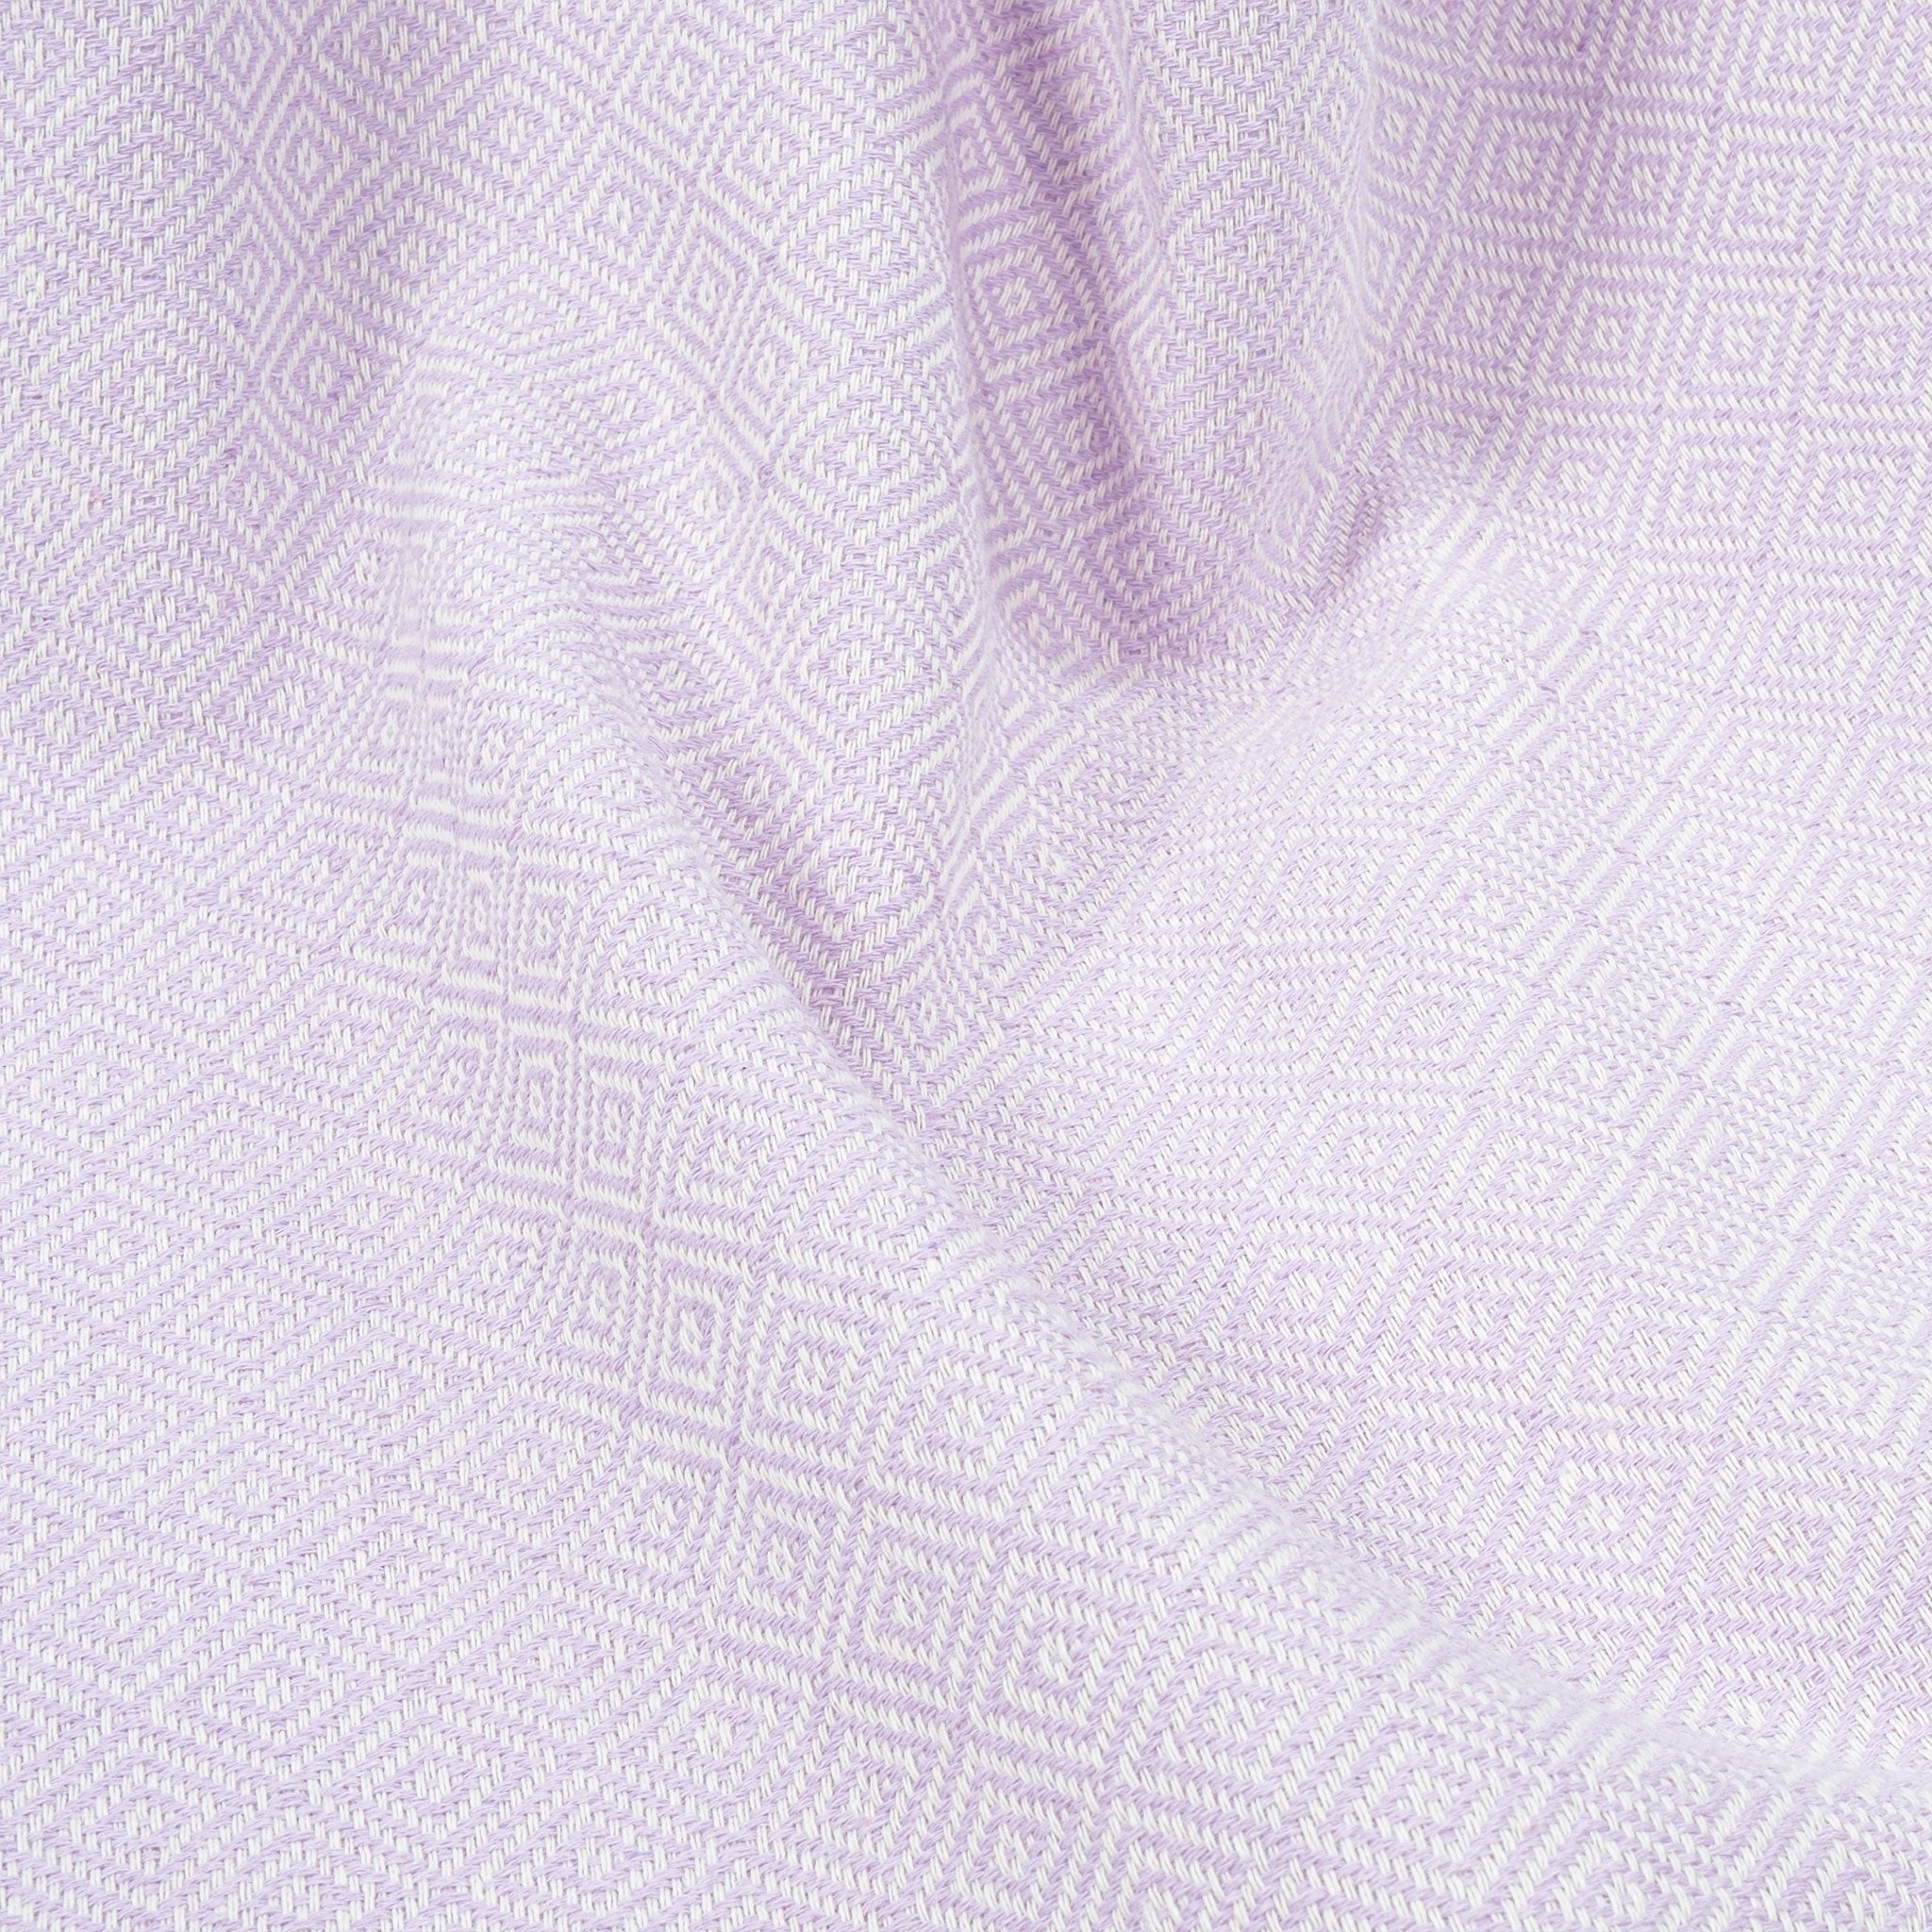 American Soft Linen - 100% Cotton Turkish Peshtemal Towels - 44 Set Case Pack - Lilac - 2